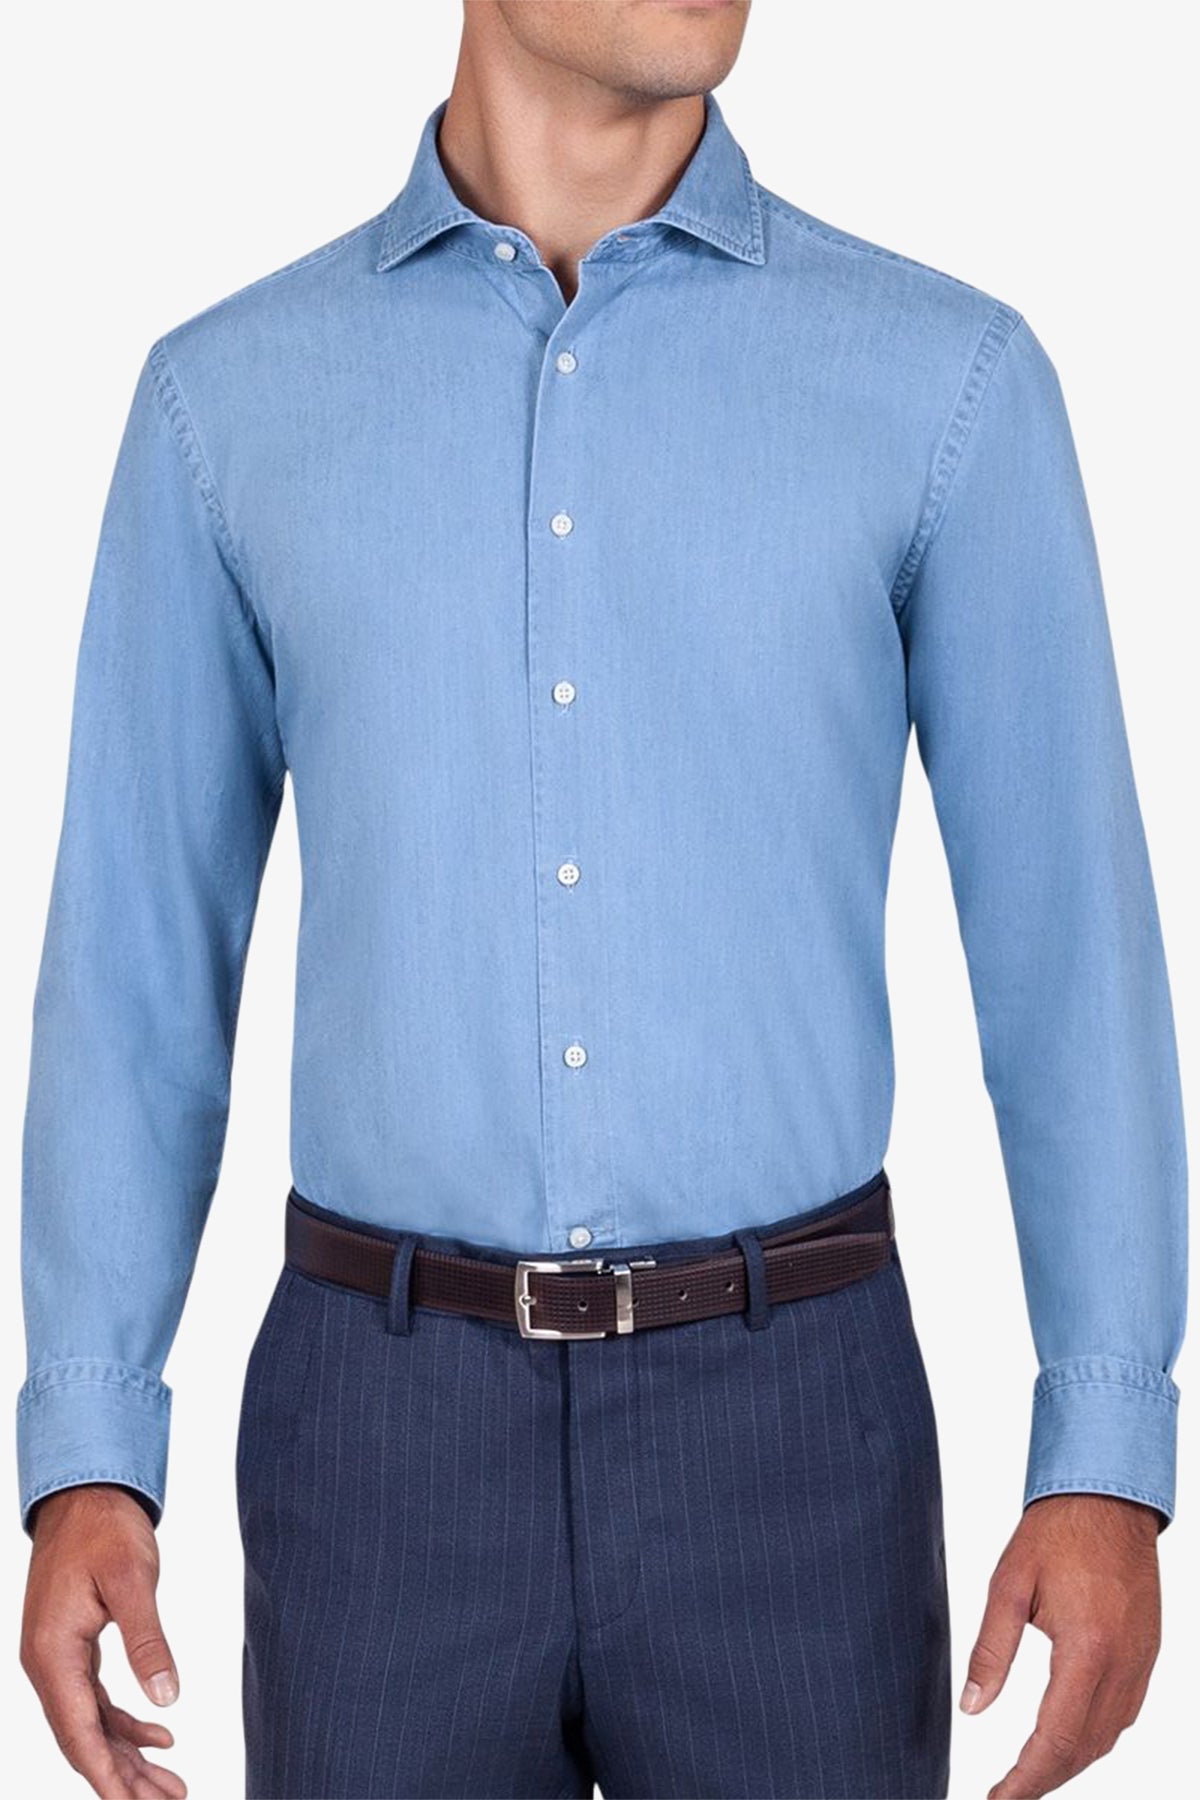 Nigel - Light Blue Denim Shirt